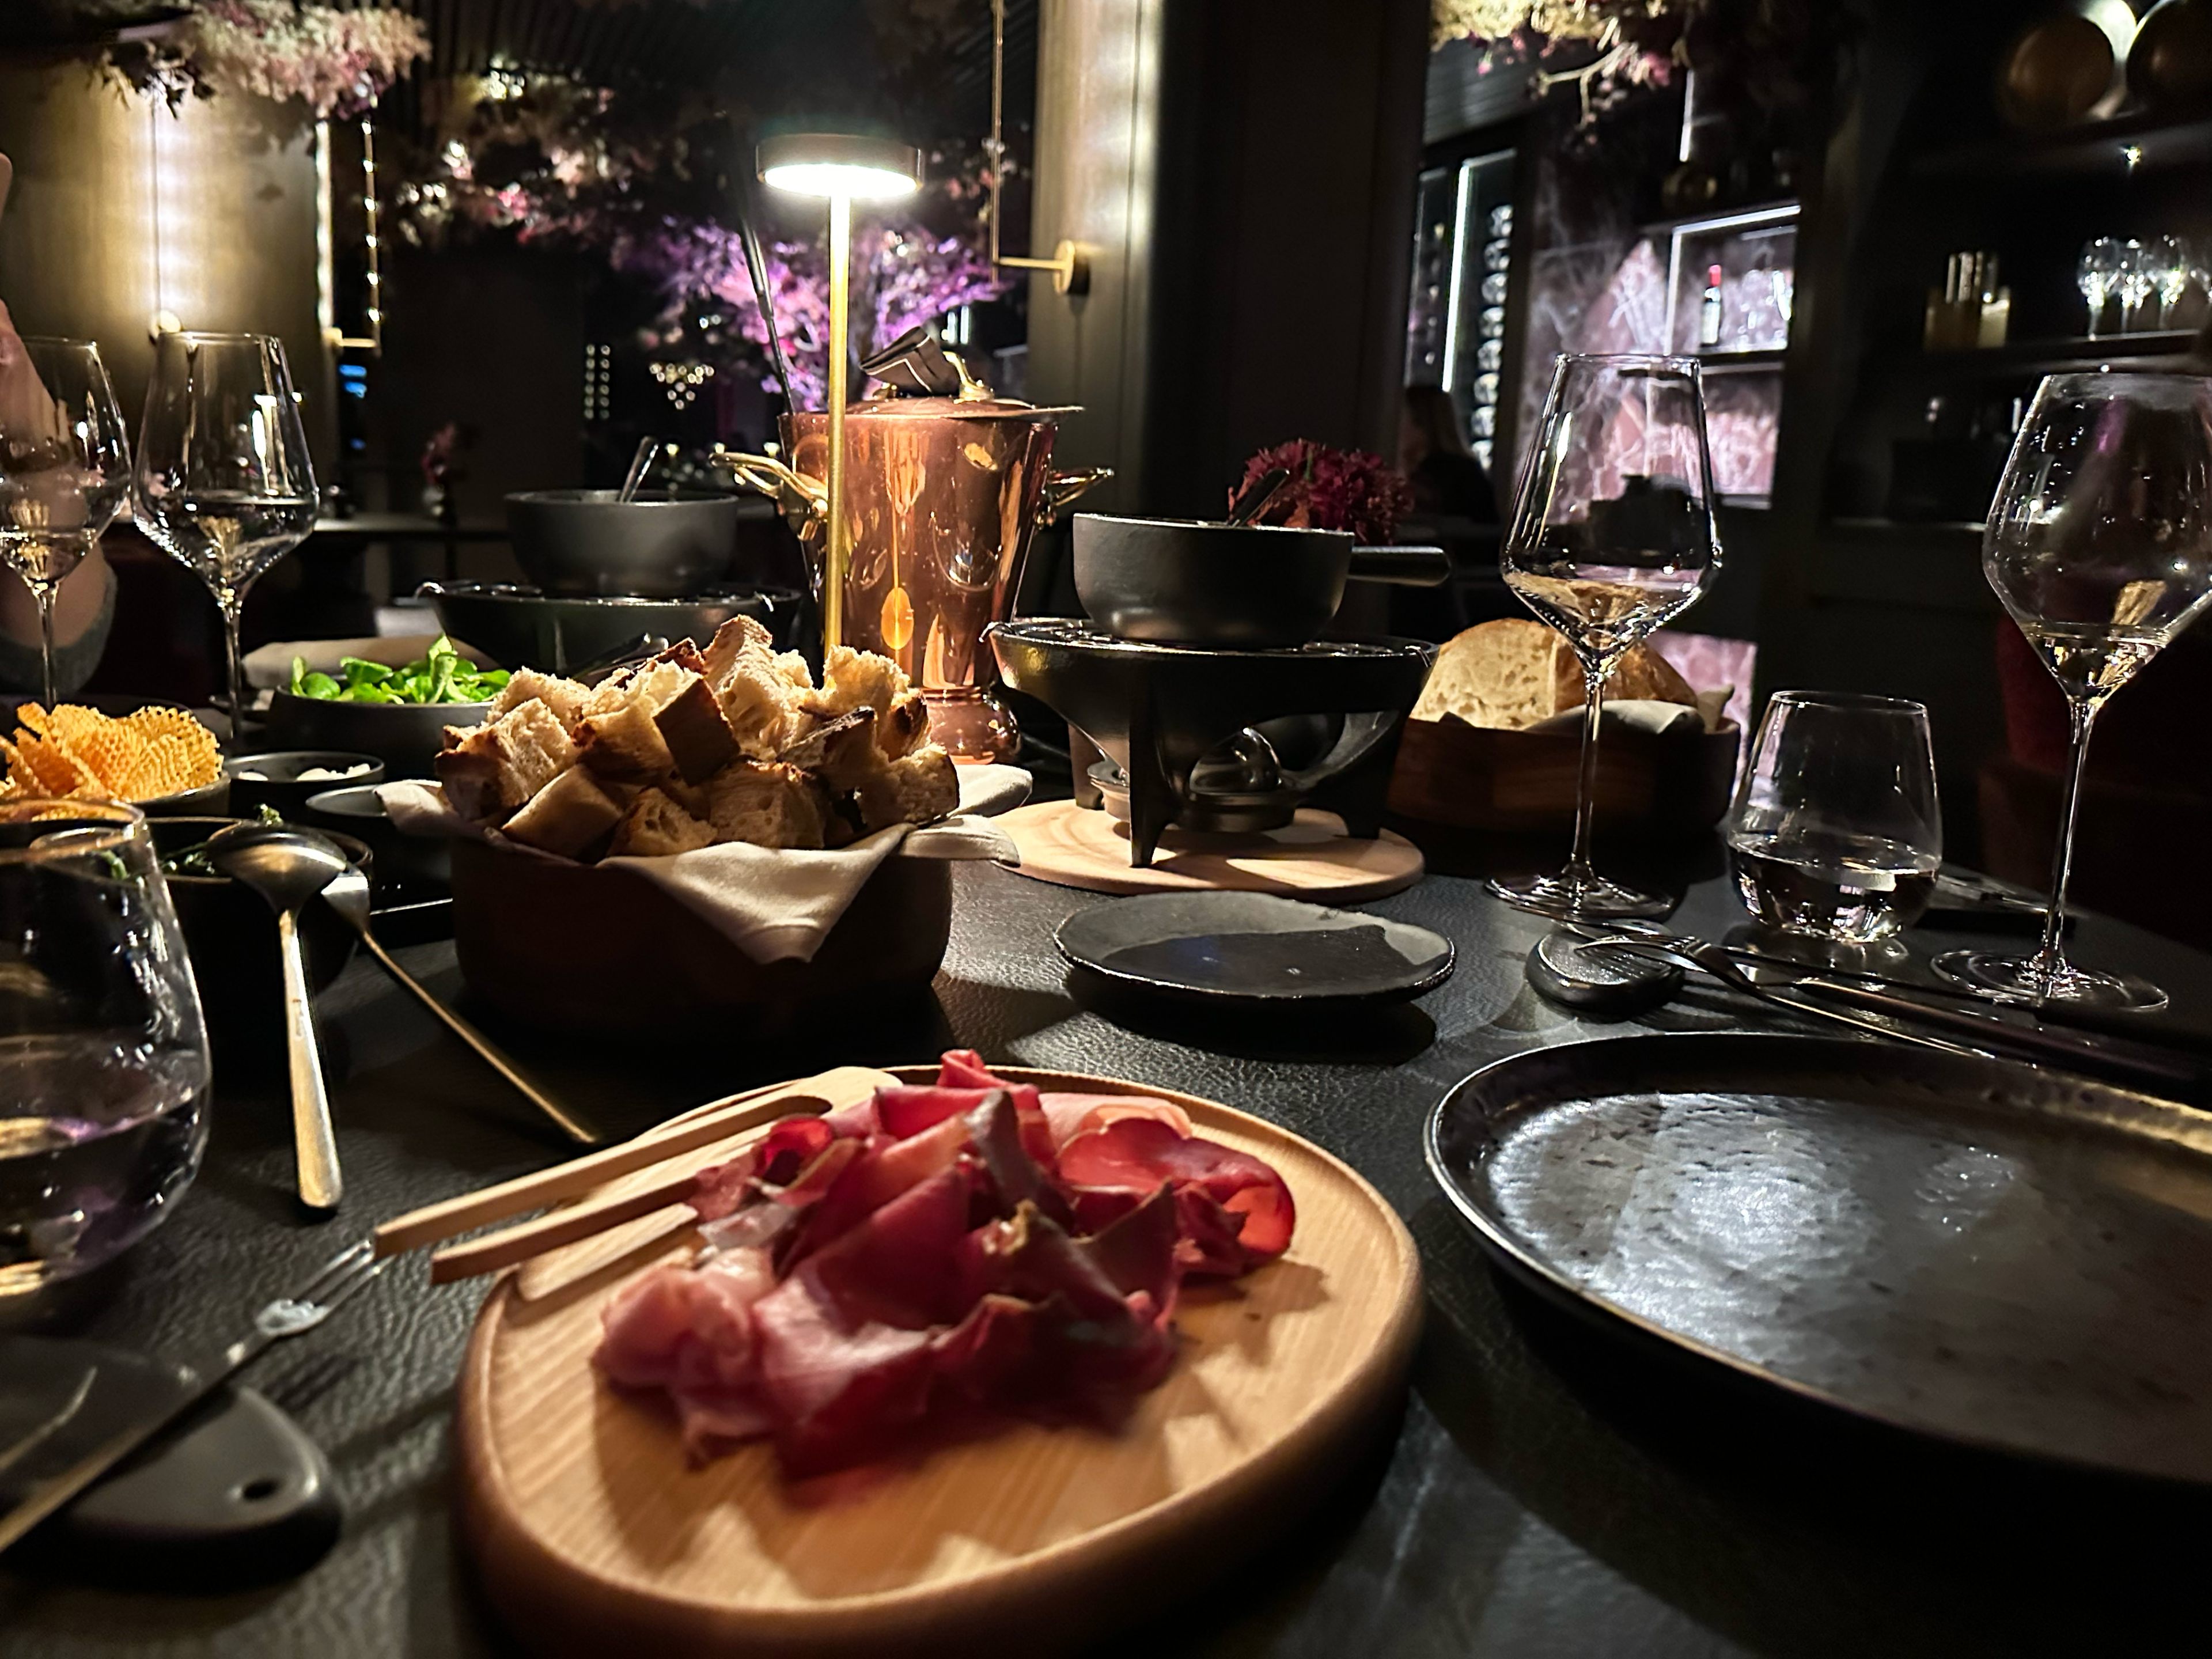 fondue and bread and wine in a dark restaurant